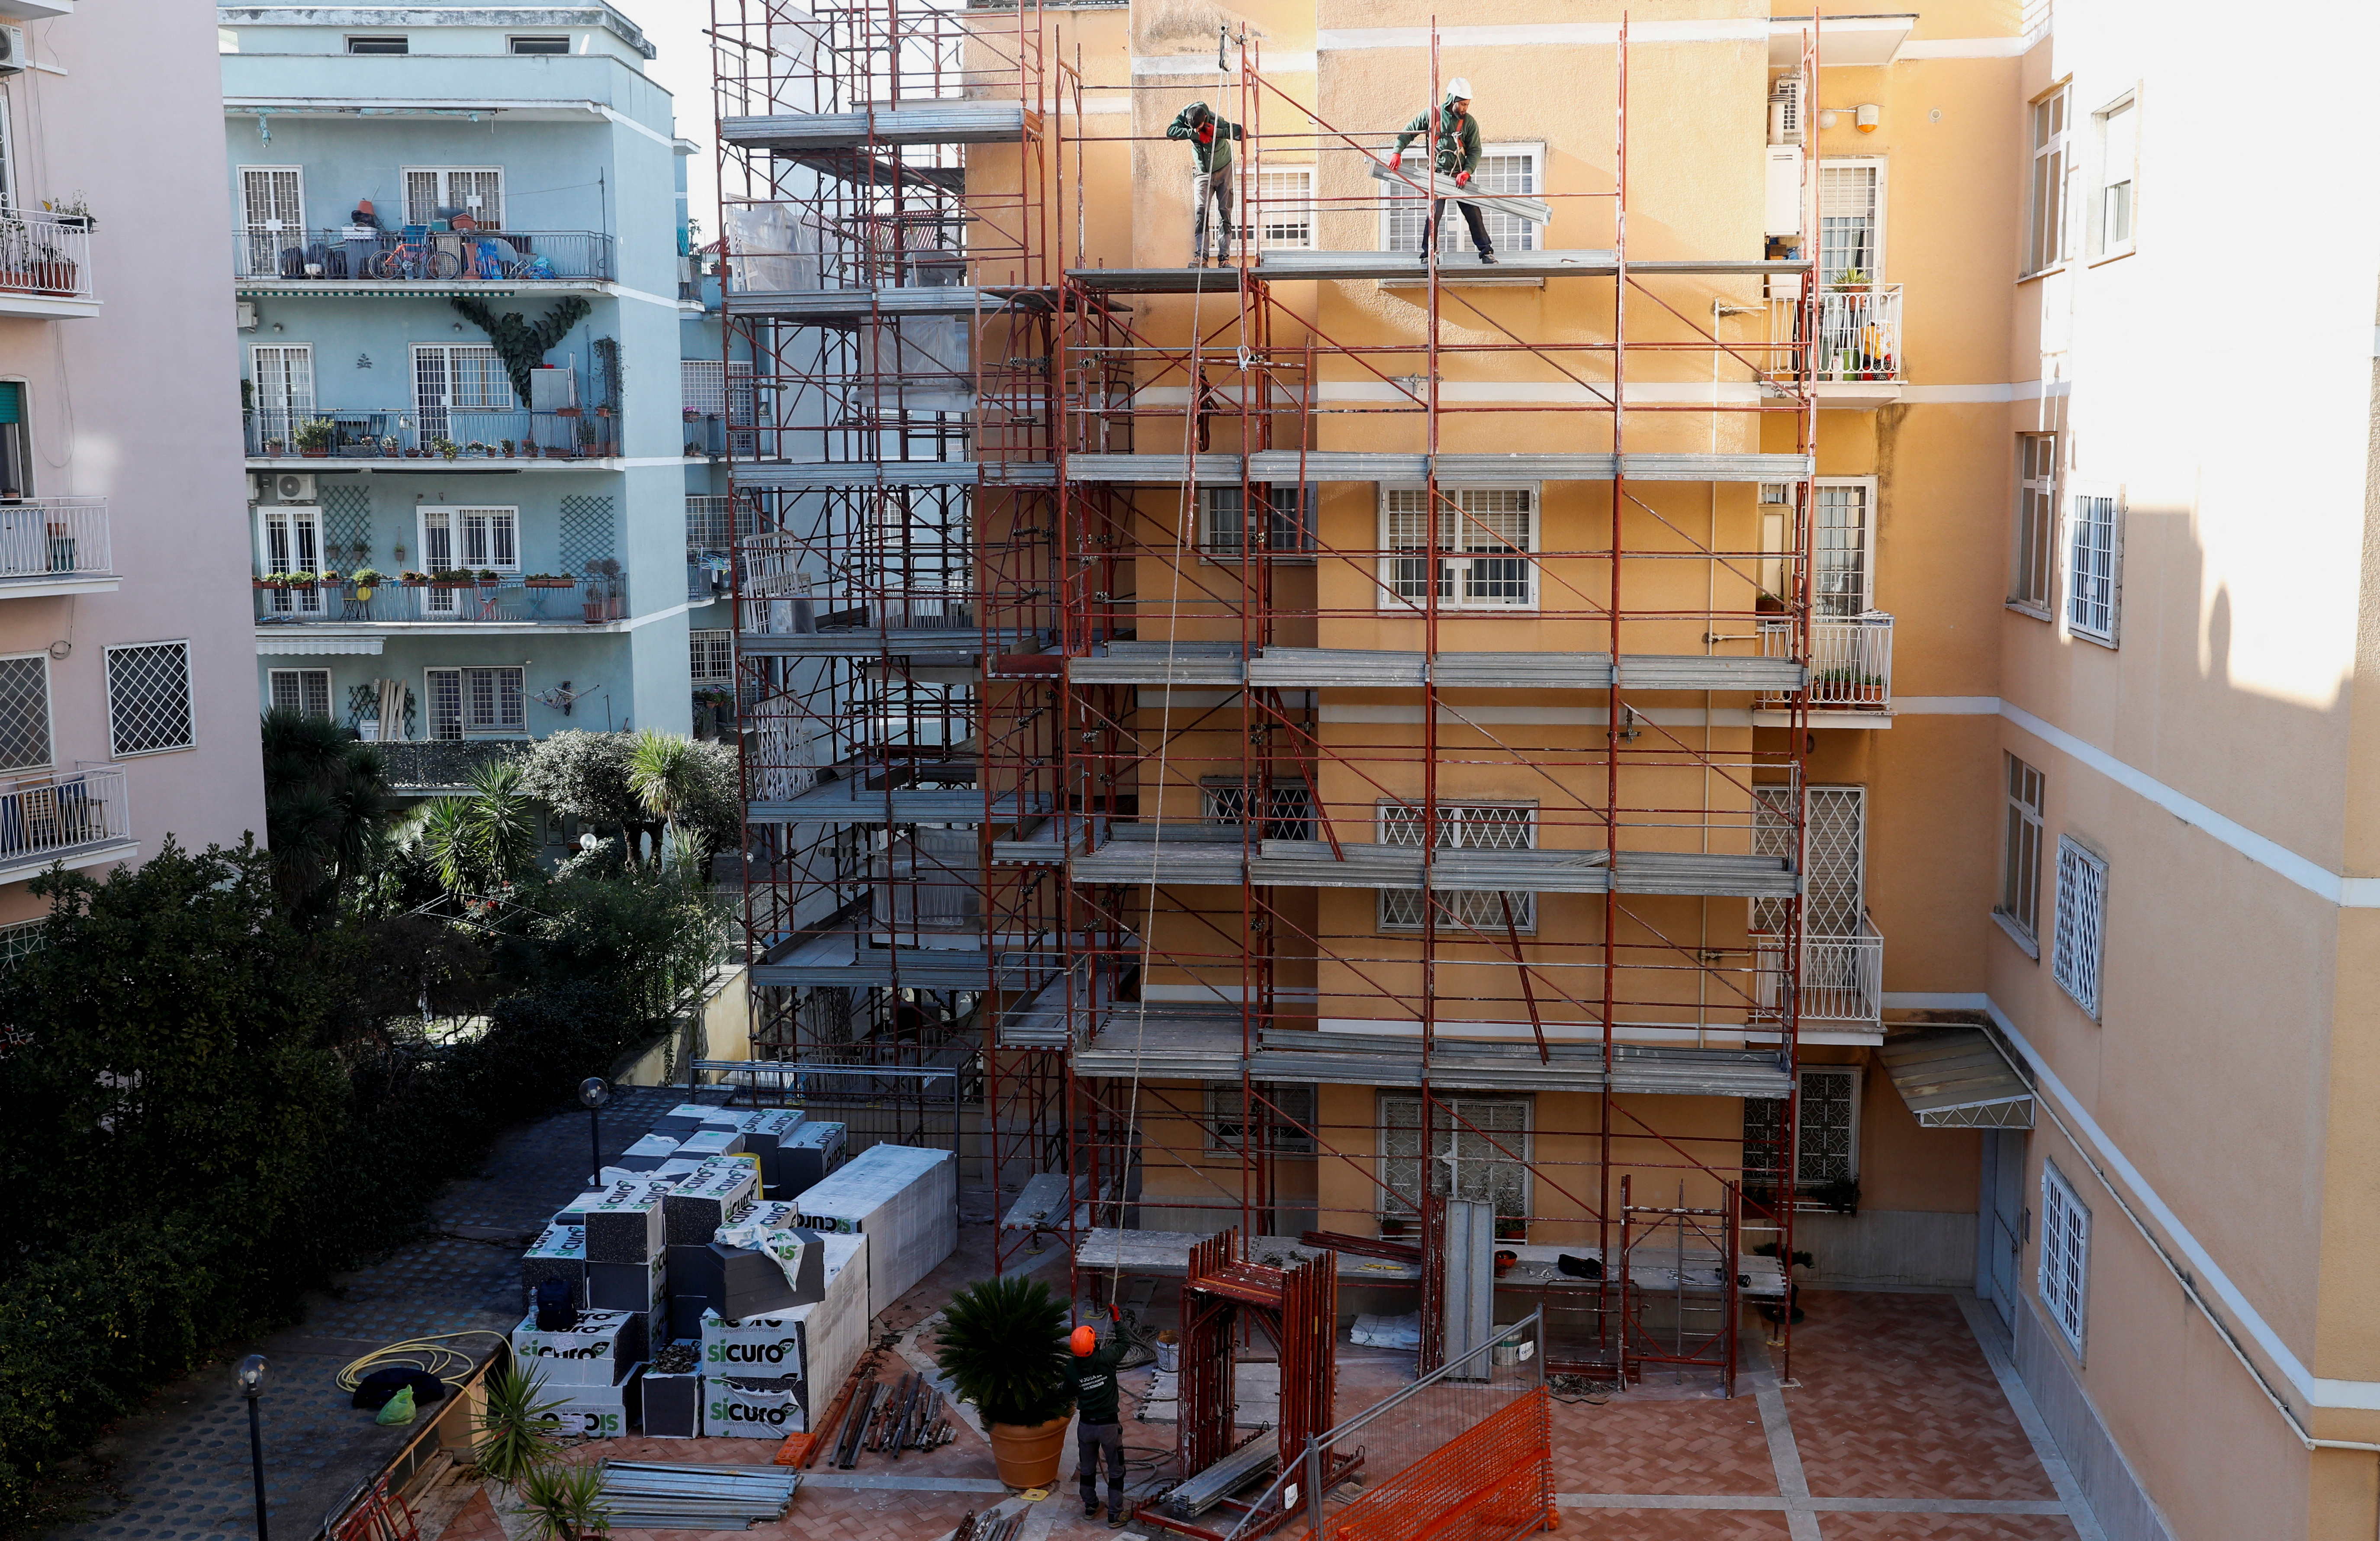 Italy seeks major renovation to EU building directive